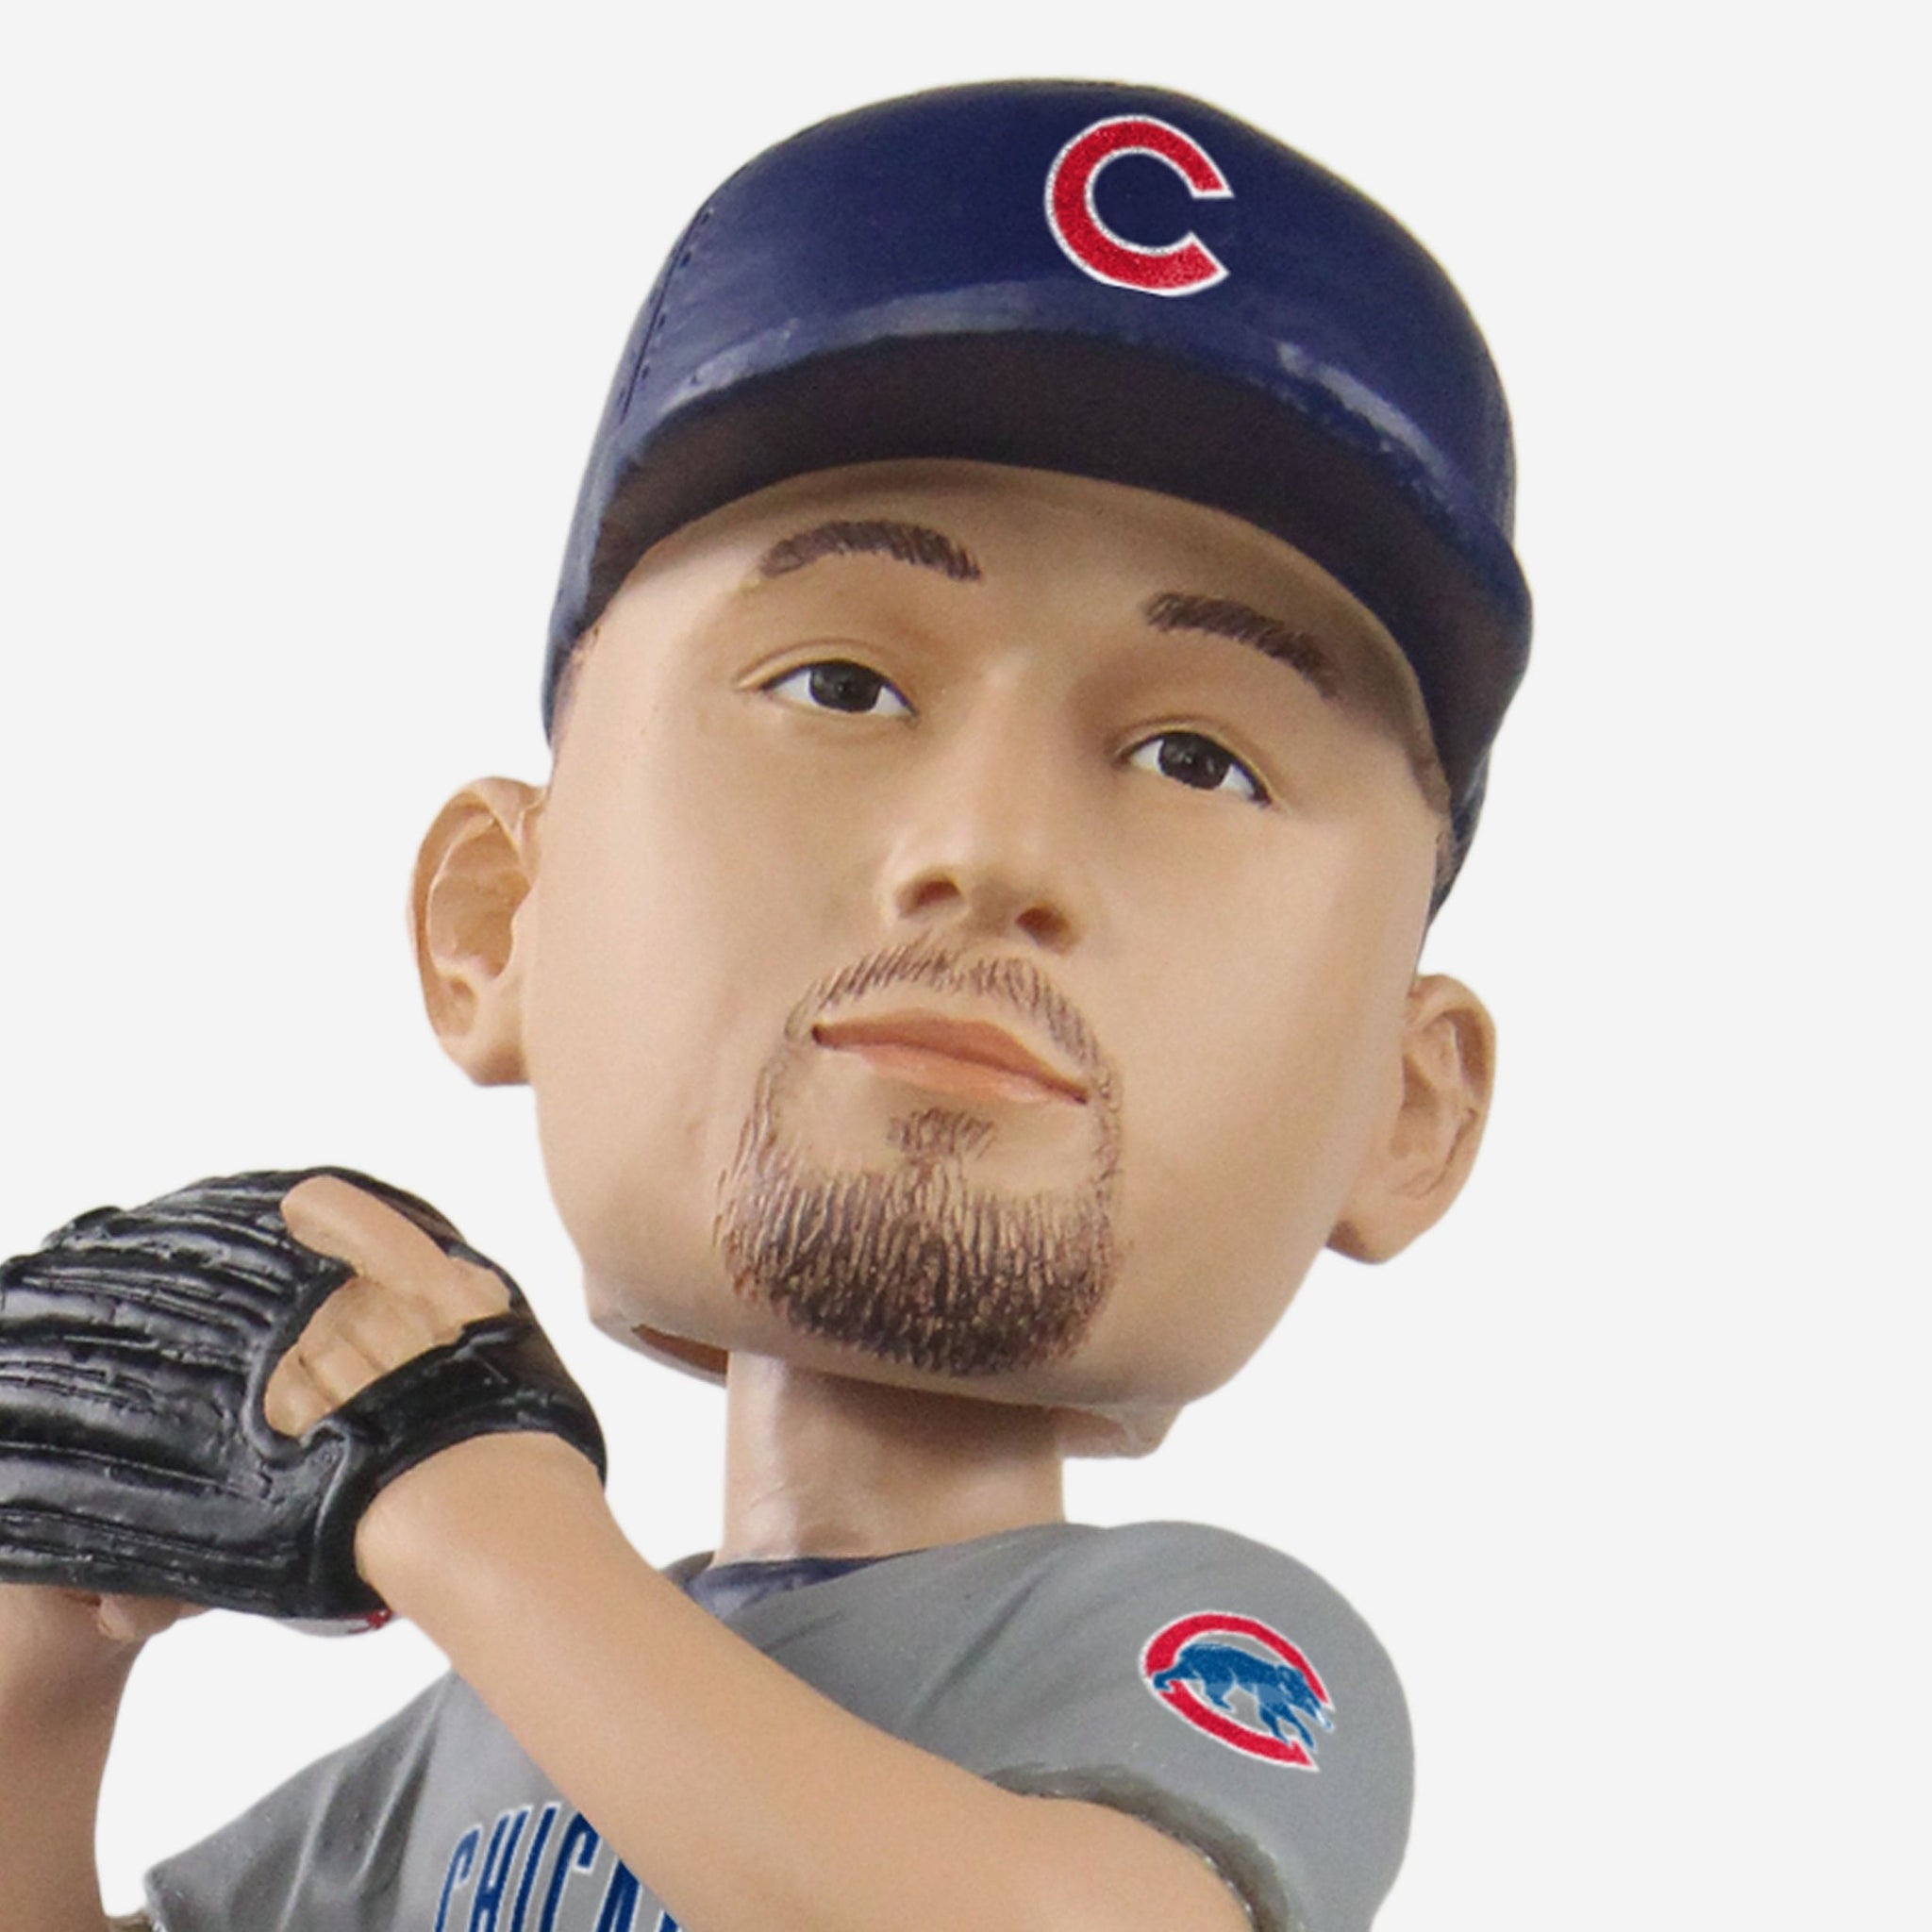 Chicago Cubs Bobblehead Shop. Chicago Cubs Figures, Chicago Cubs Bobbles.  FOCO